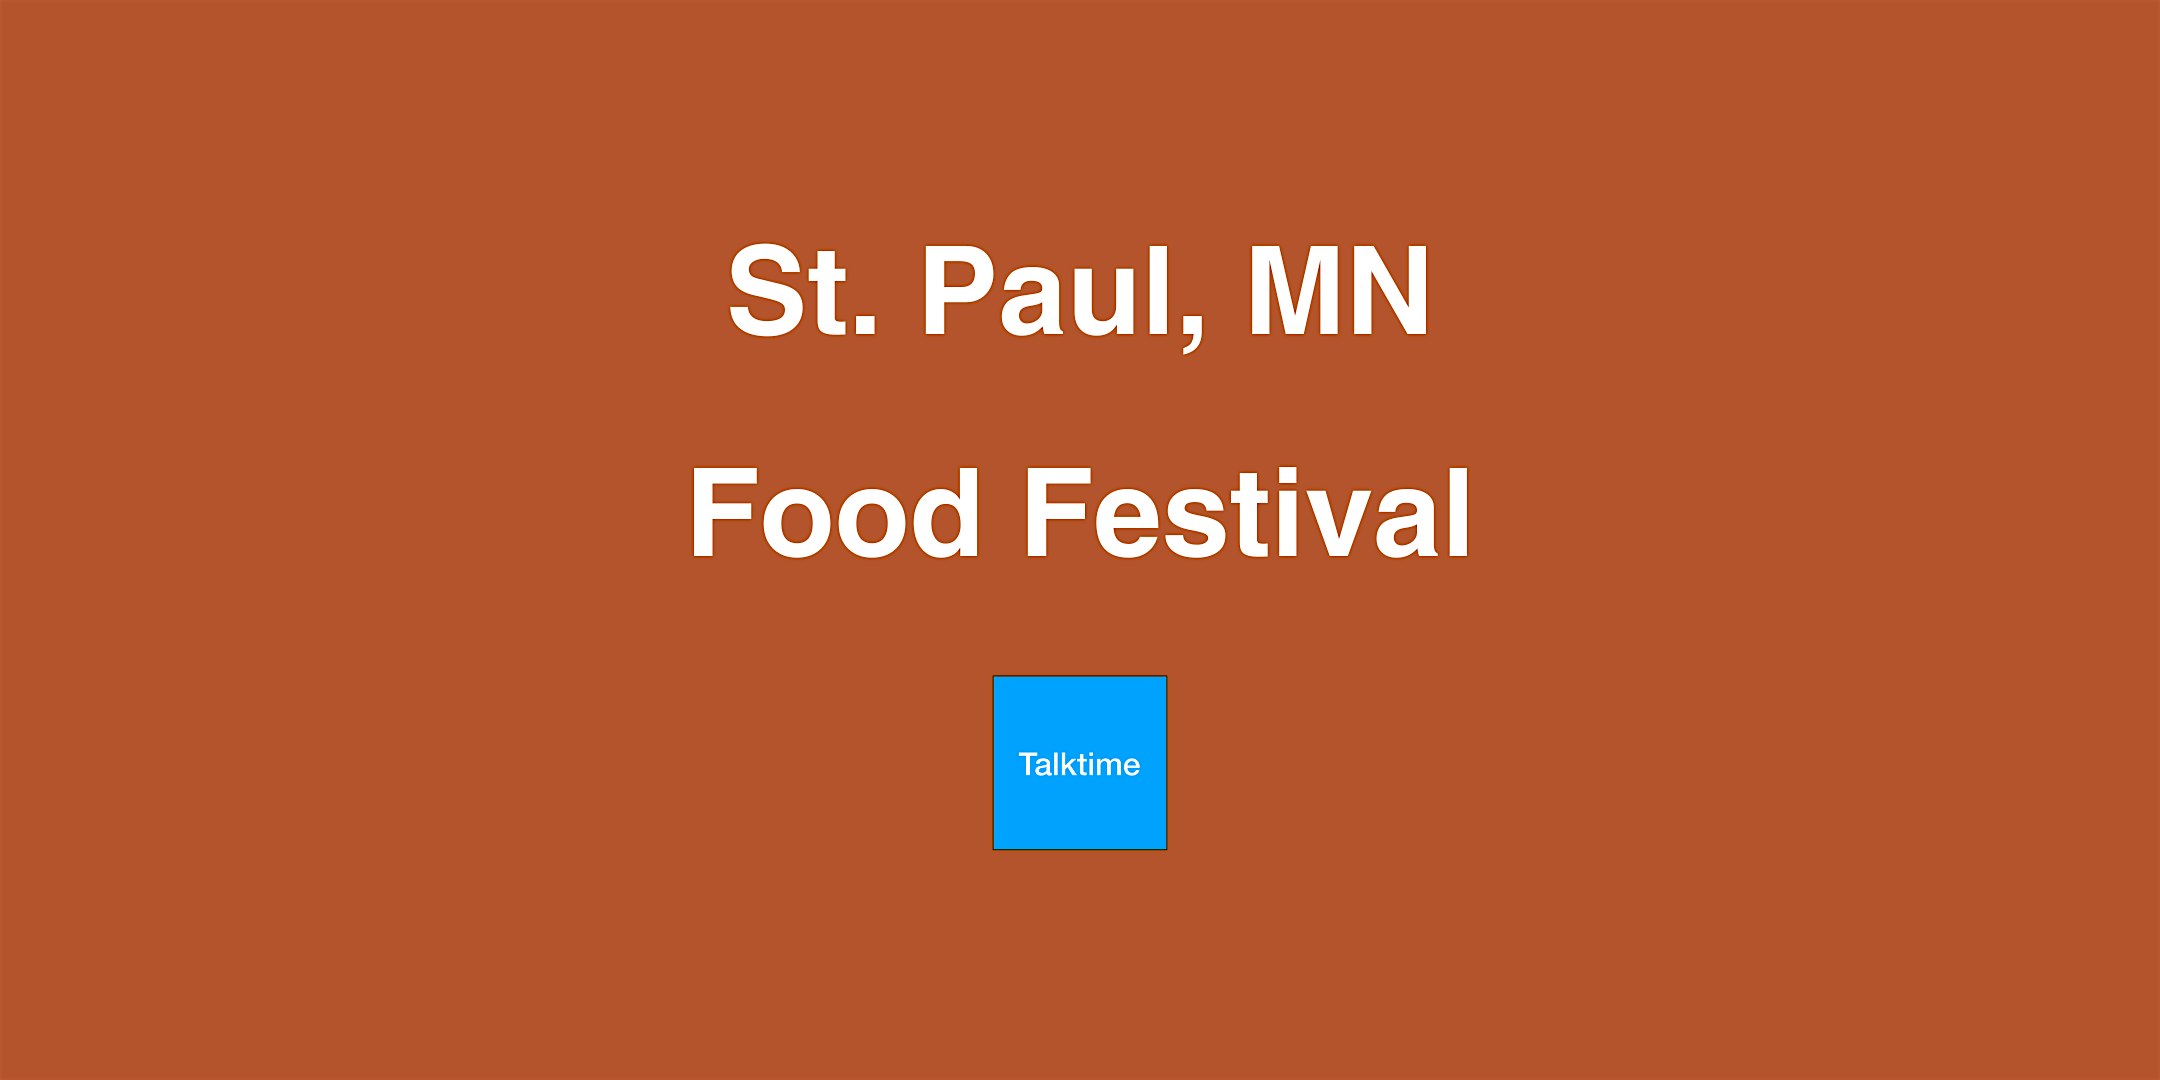 Food Festival - St. Paul